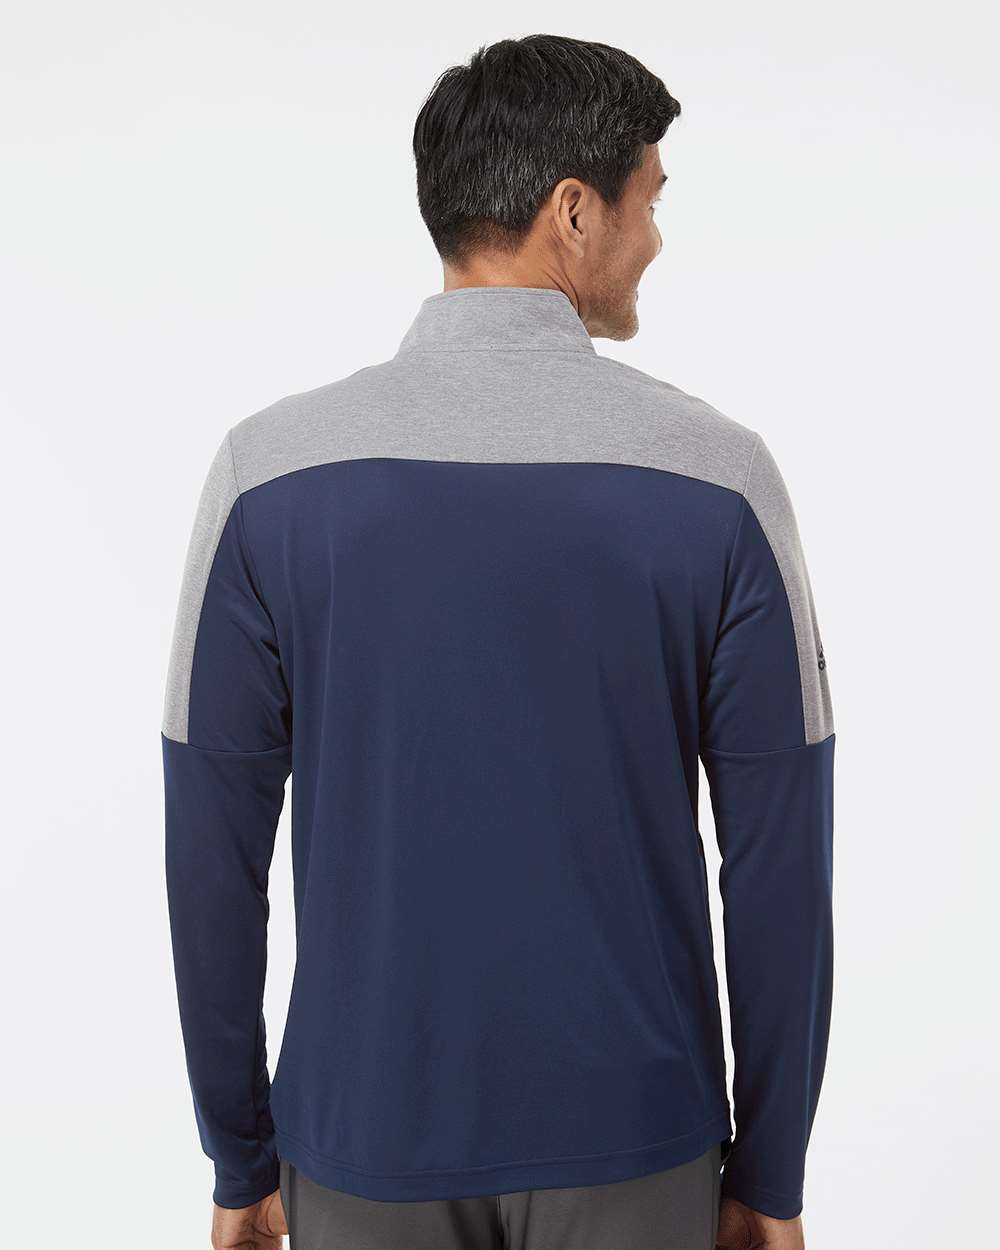 Adidas A552 Lightweight Quarter-Zip Pullover #colormdl_Collegiate Navy/ Grey Three Melange